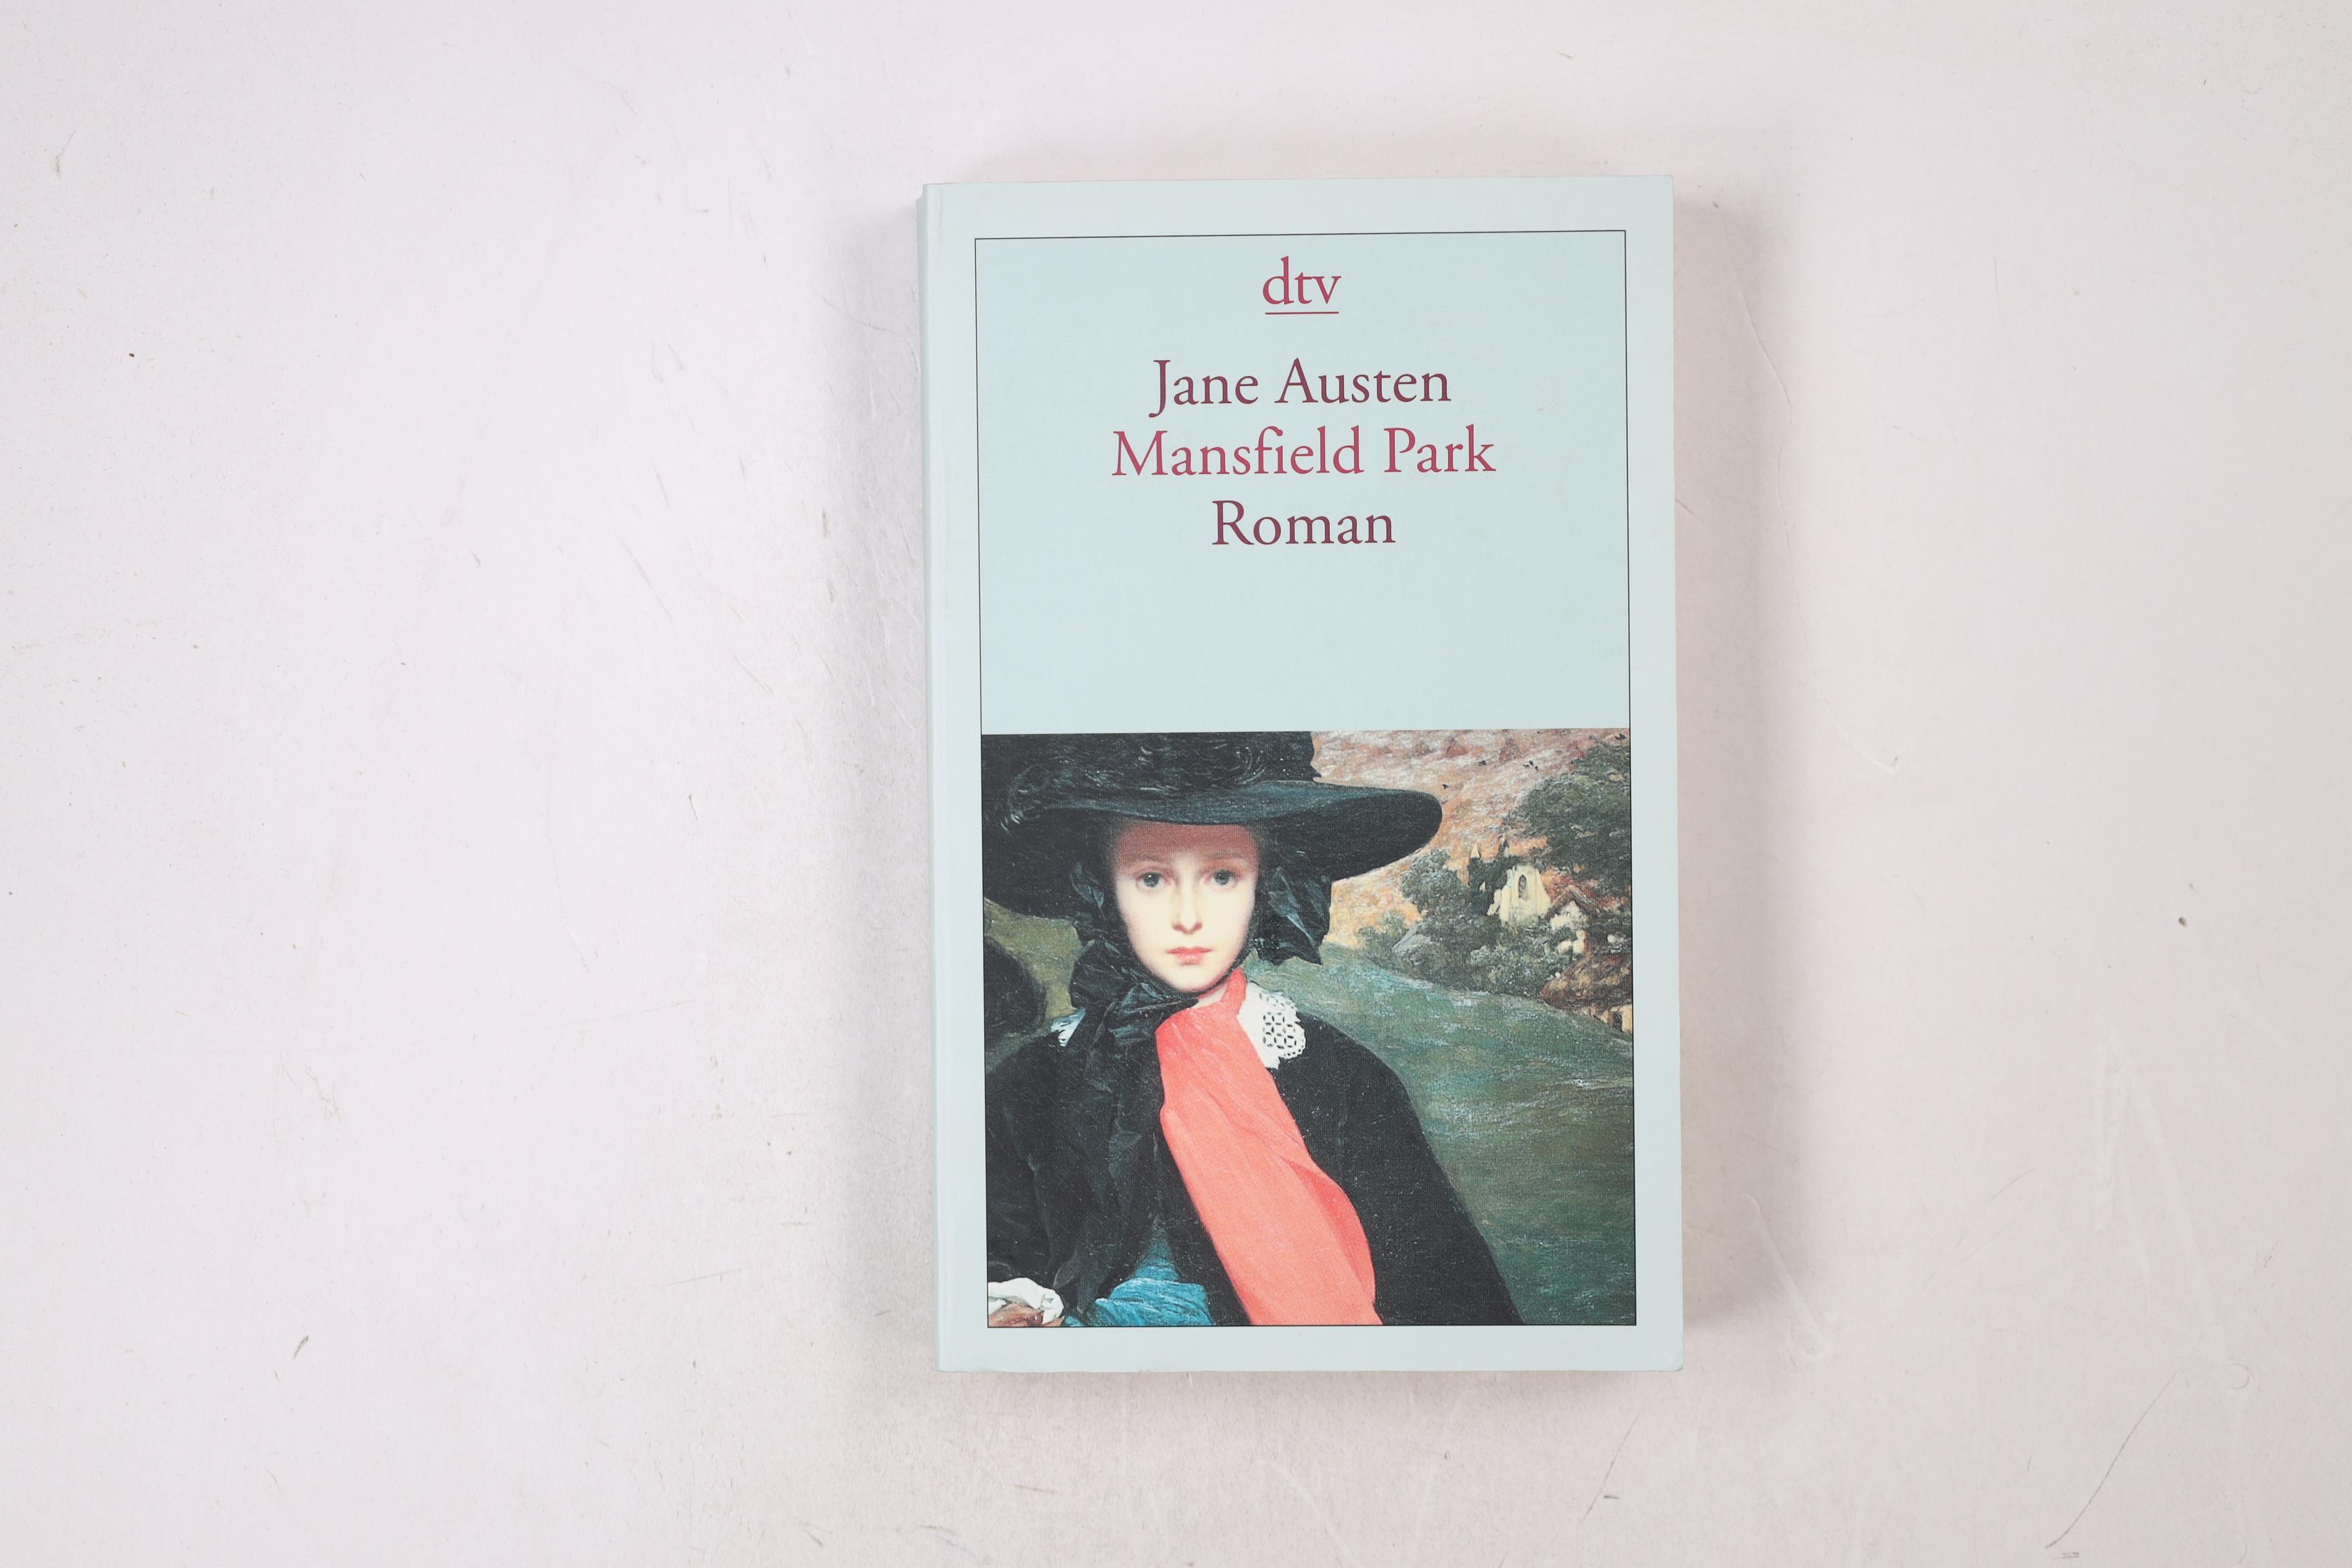 MANSFIELD PARK. Roman - Austen, Jane